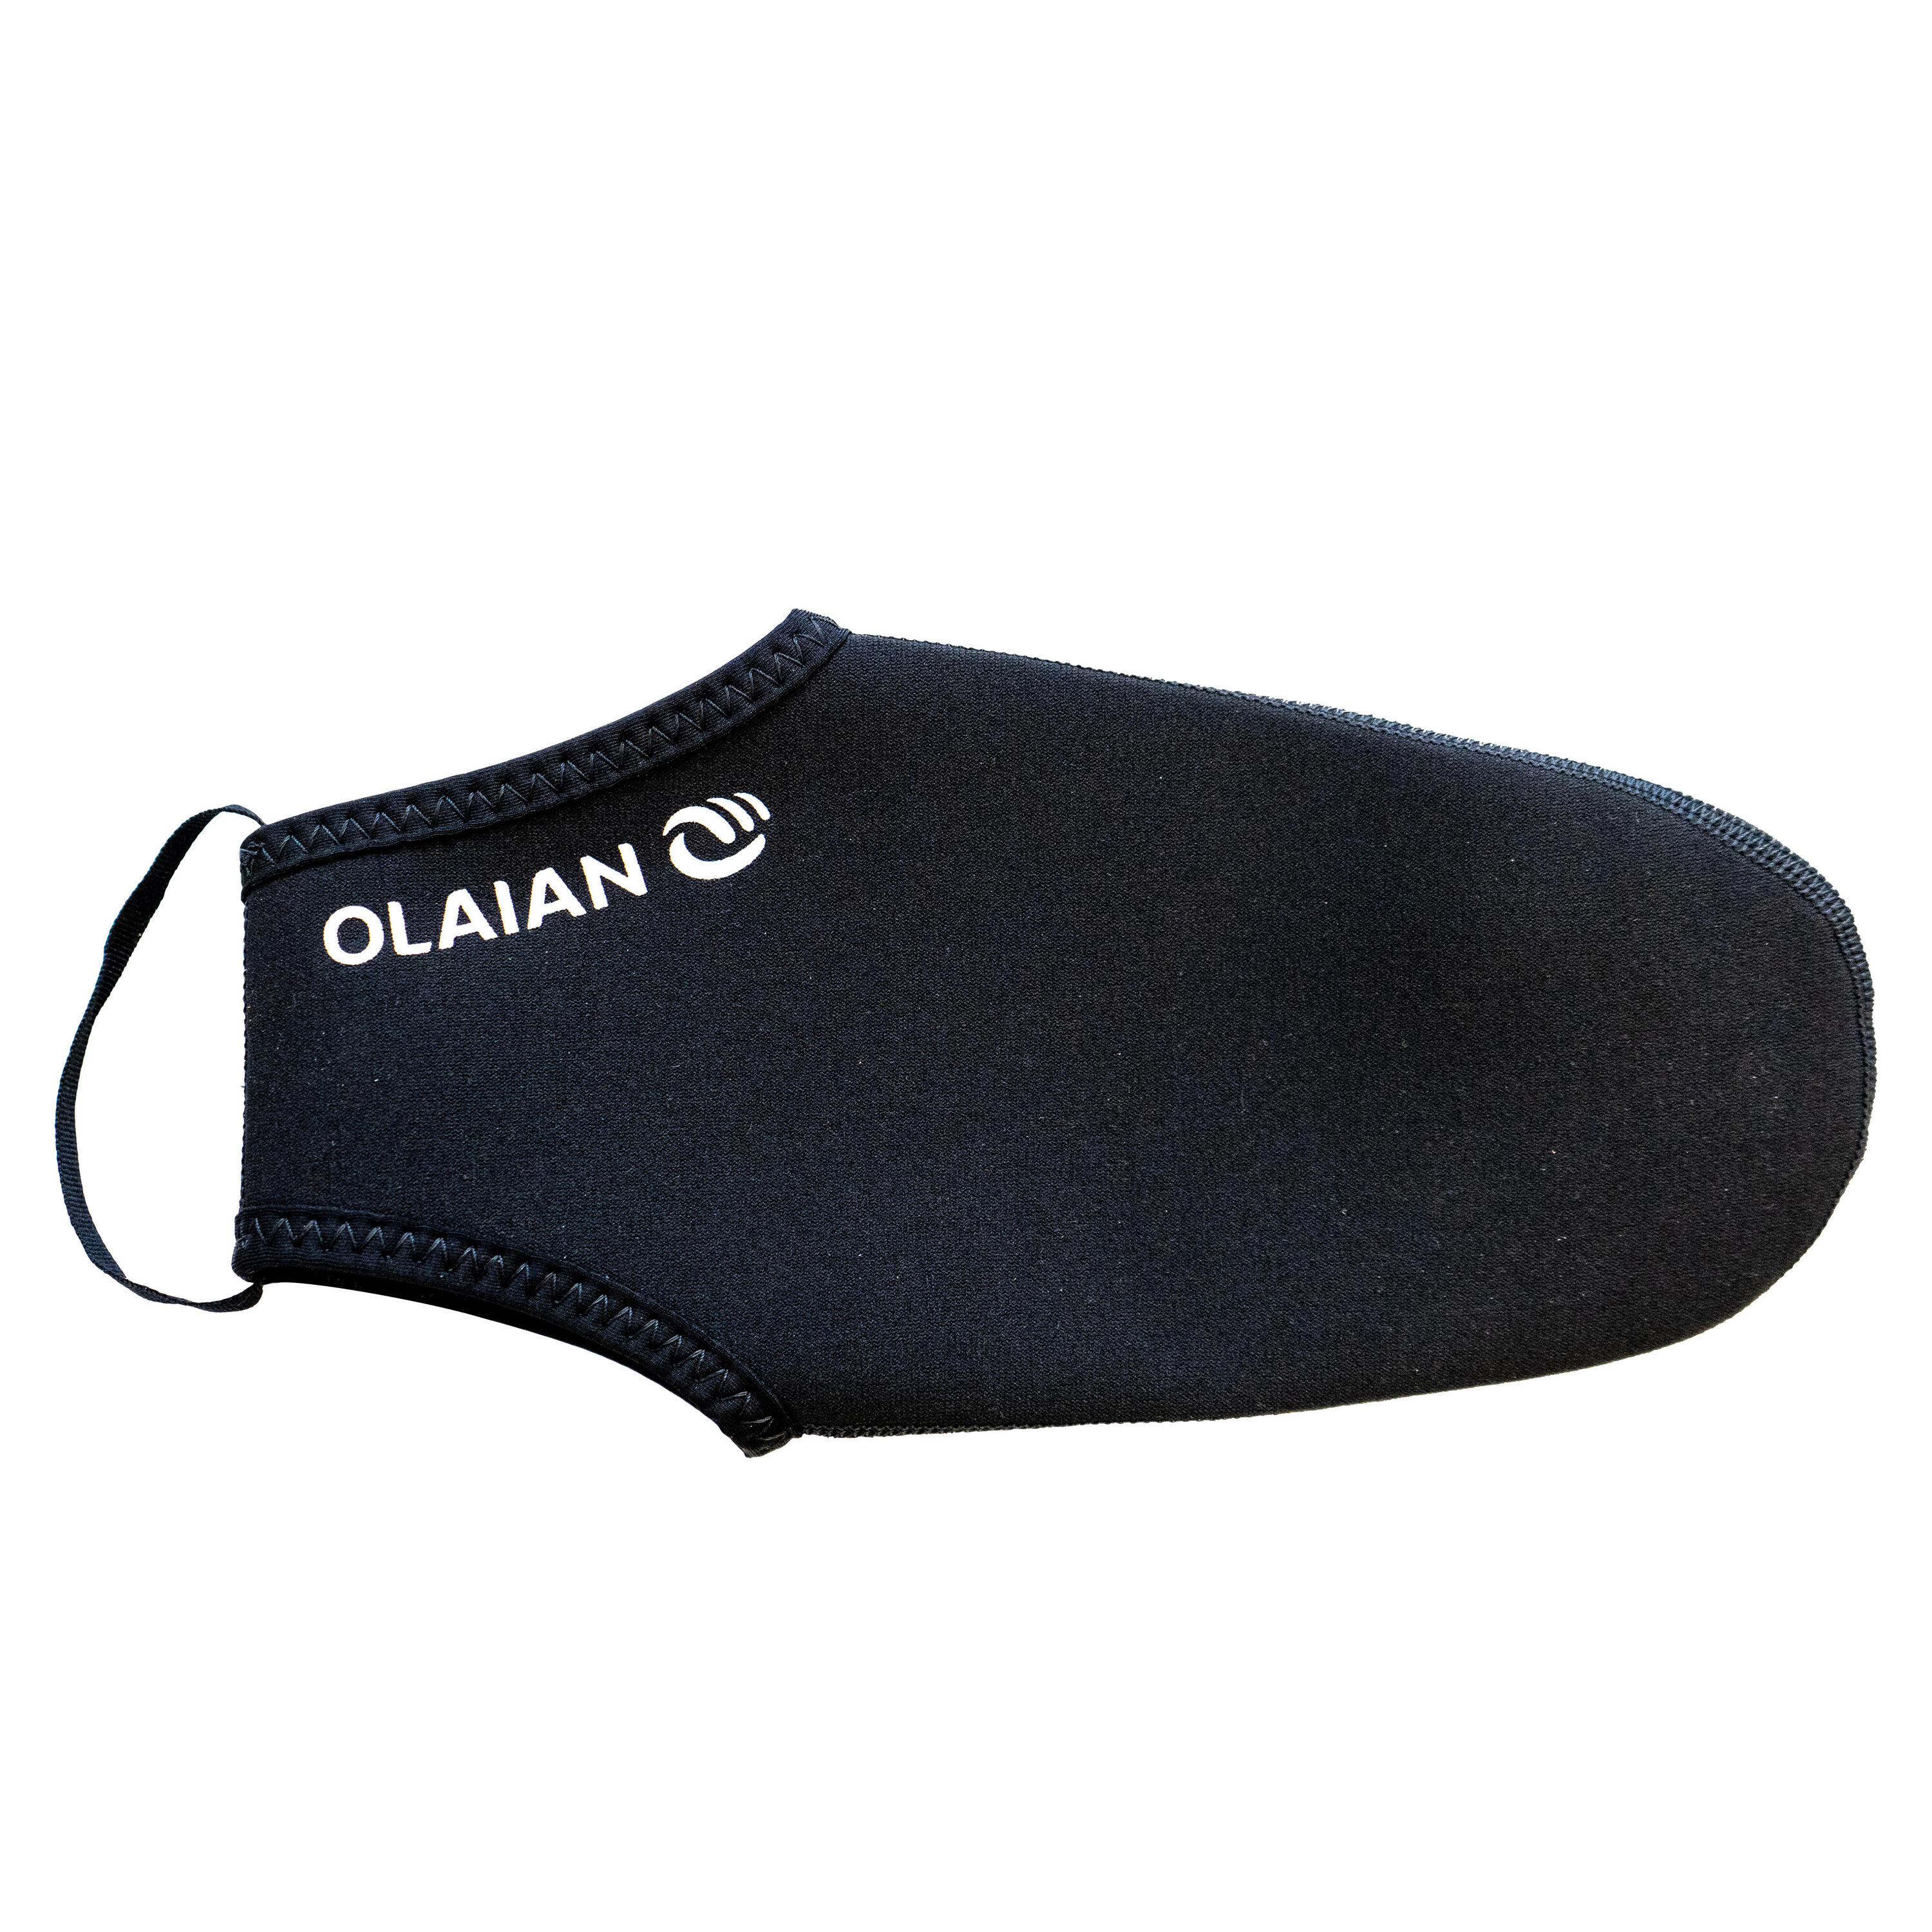 OLAIAN Bodyboarding fin socks 1.50 mm neoprene - black